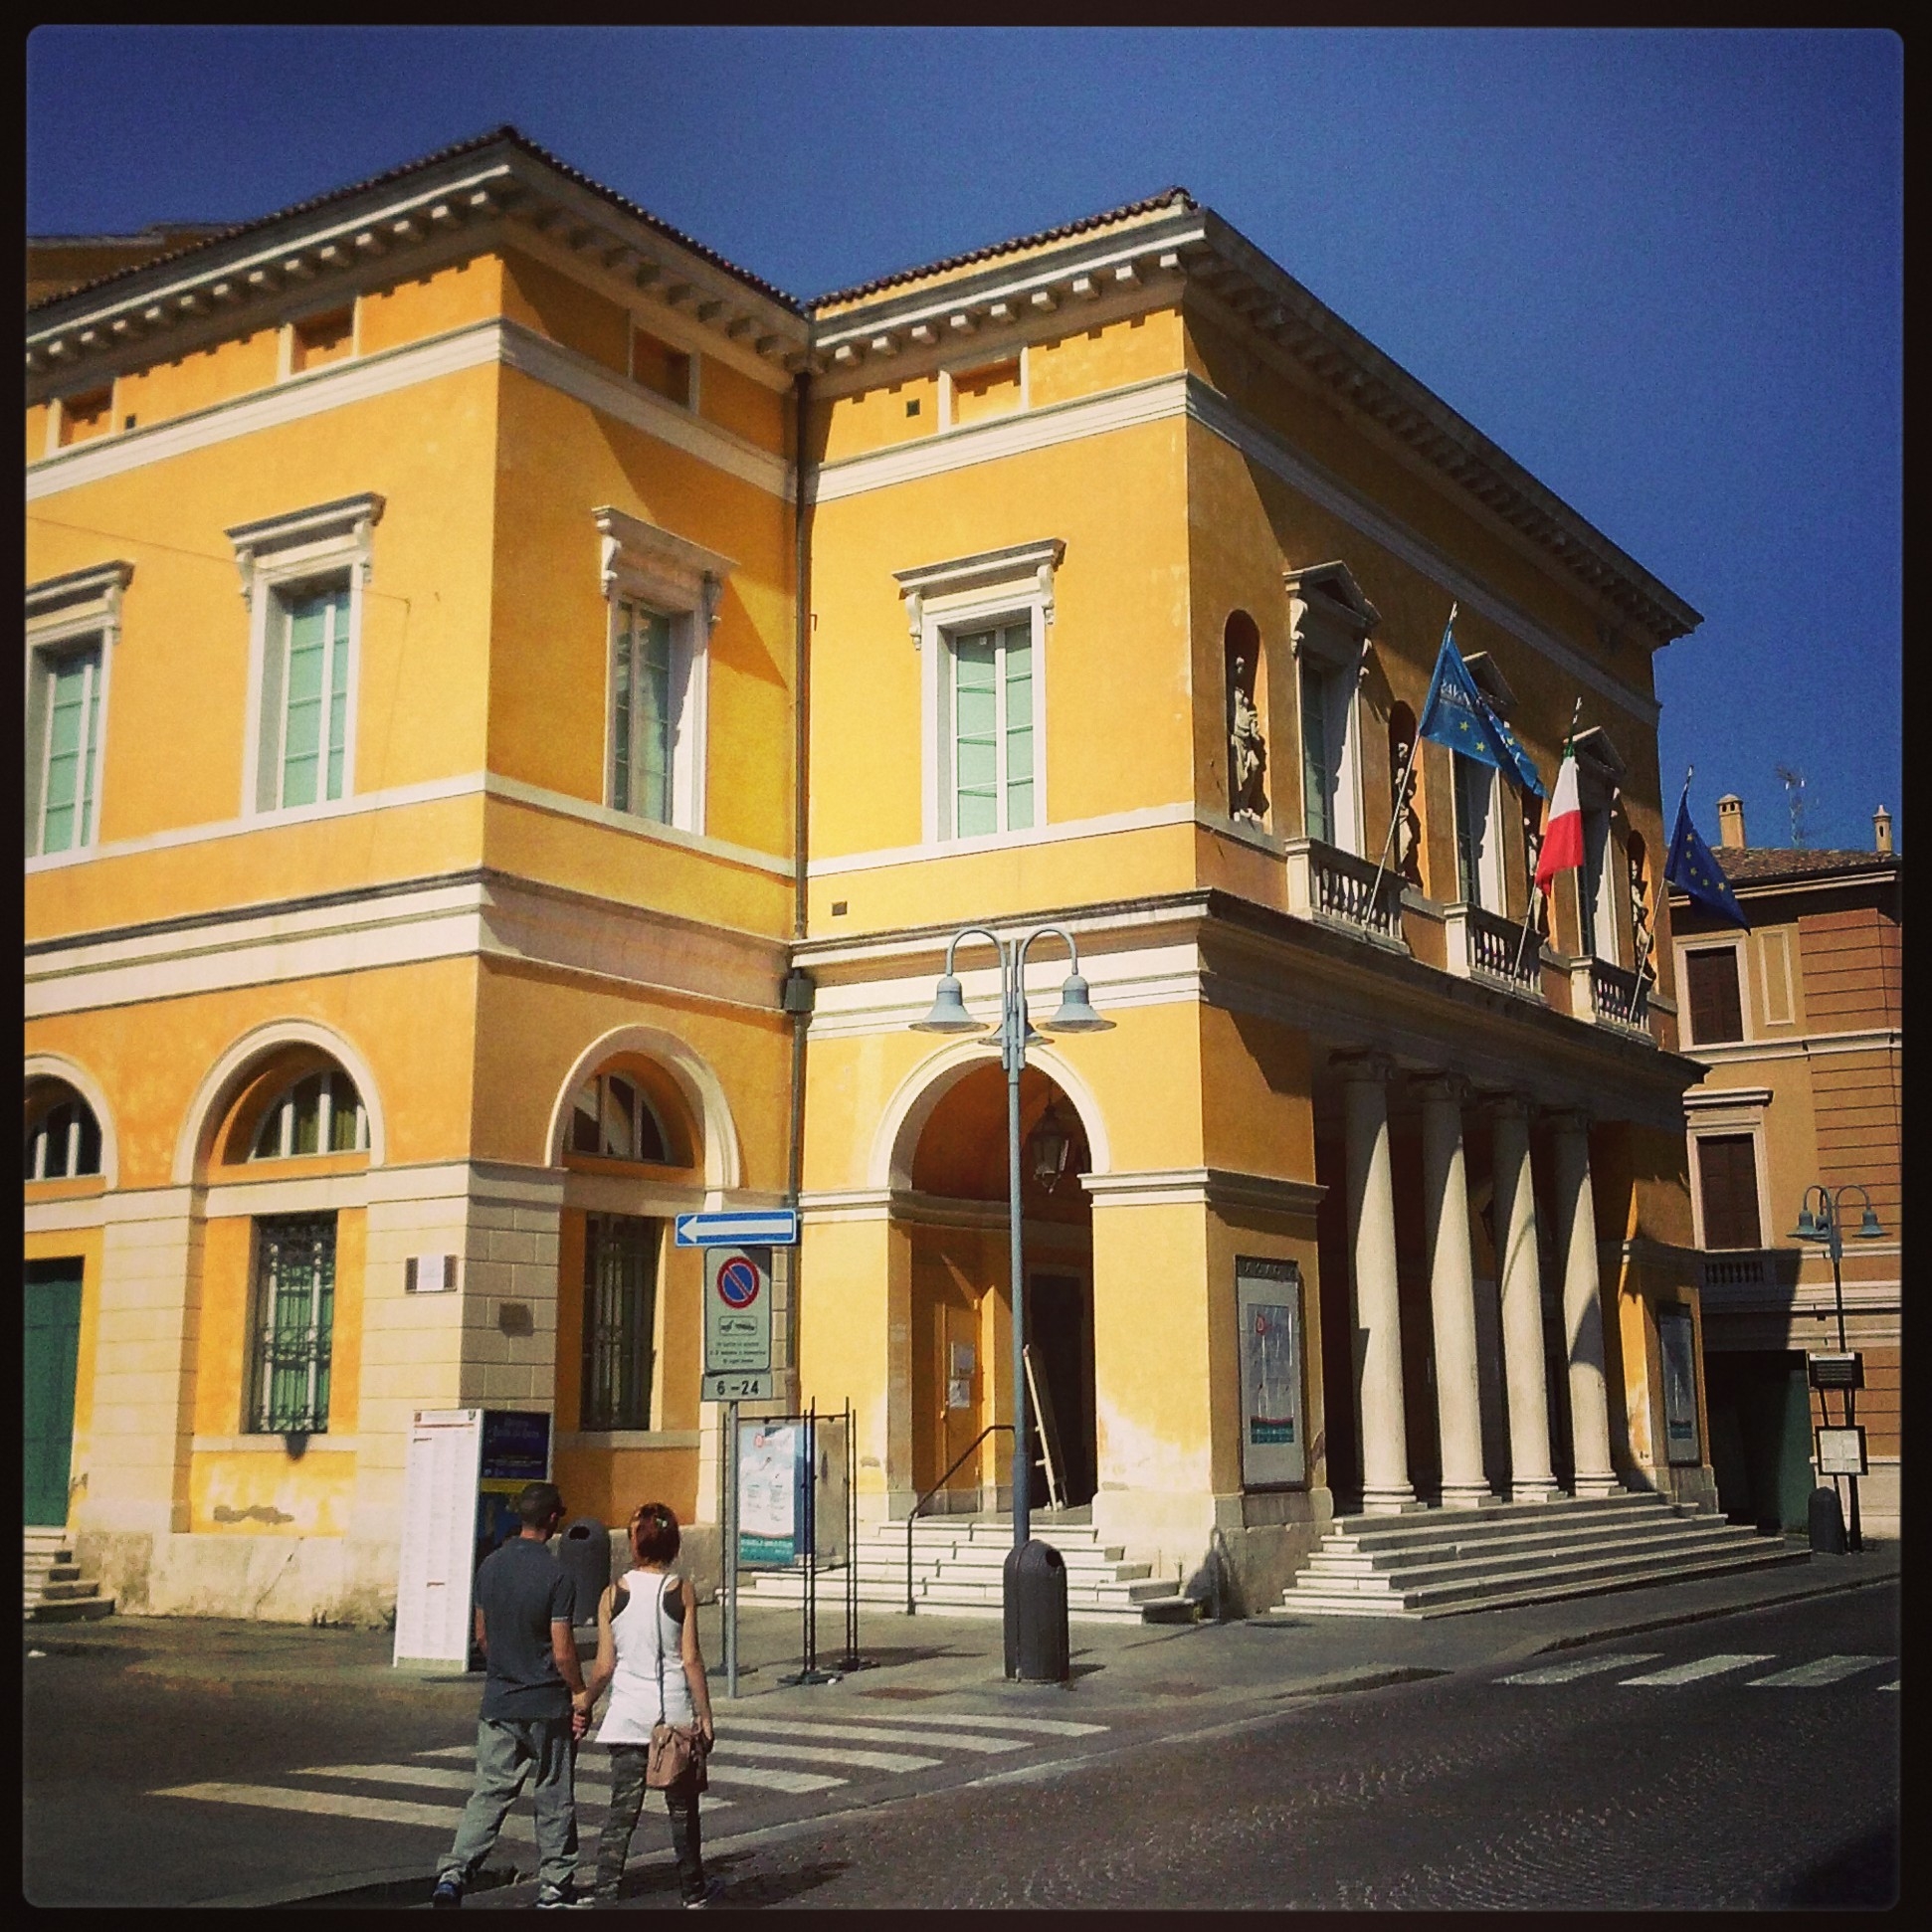 photo: https://upload.wikimedia.org/wikipedia/commons/1/15/Teatro_Alighieri_Ravenna_%28RA%29.JPG